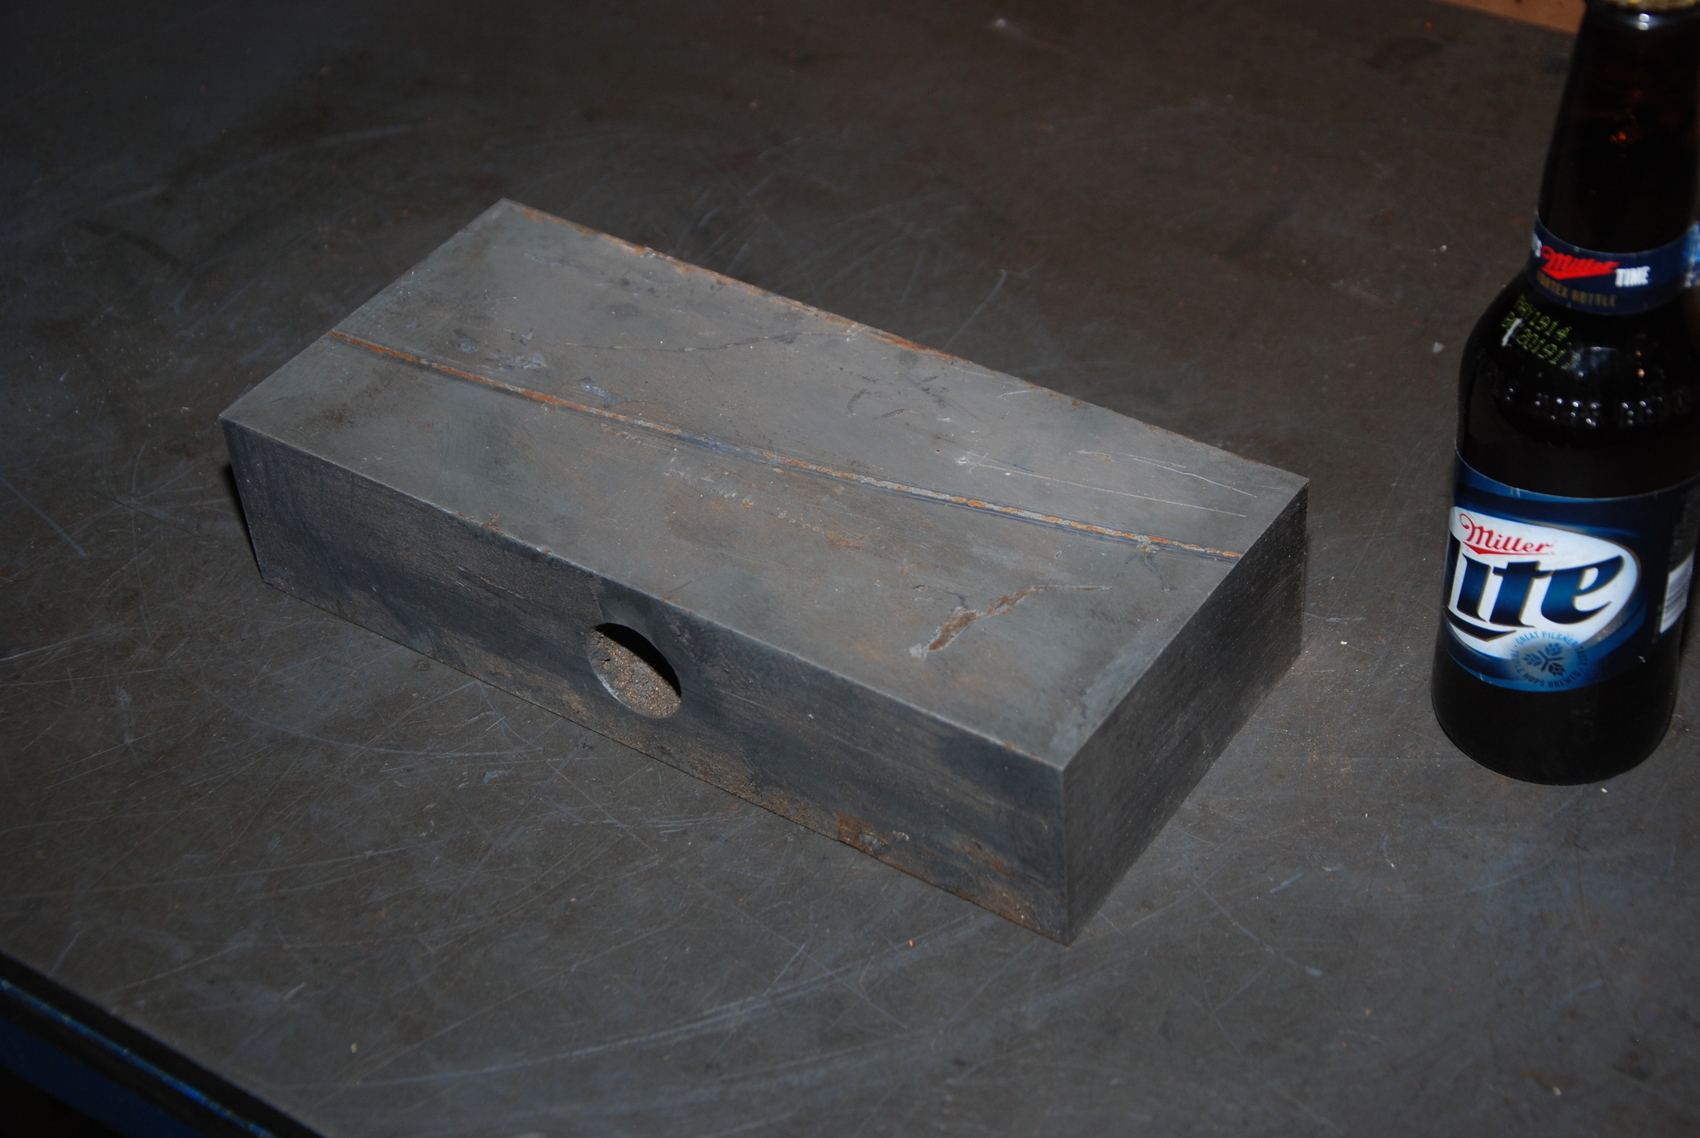 ONE steel Rectangular Bar for blacksmith anvil,37 lbs;11x5x2.5"